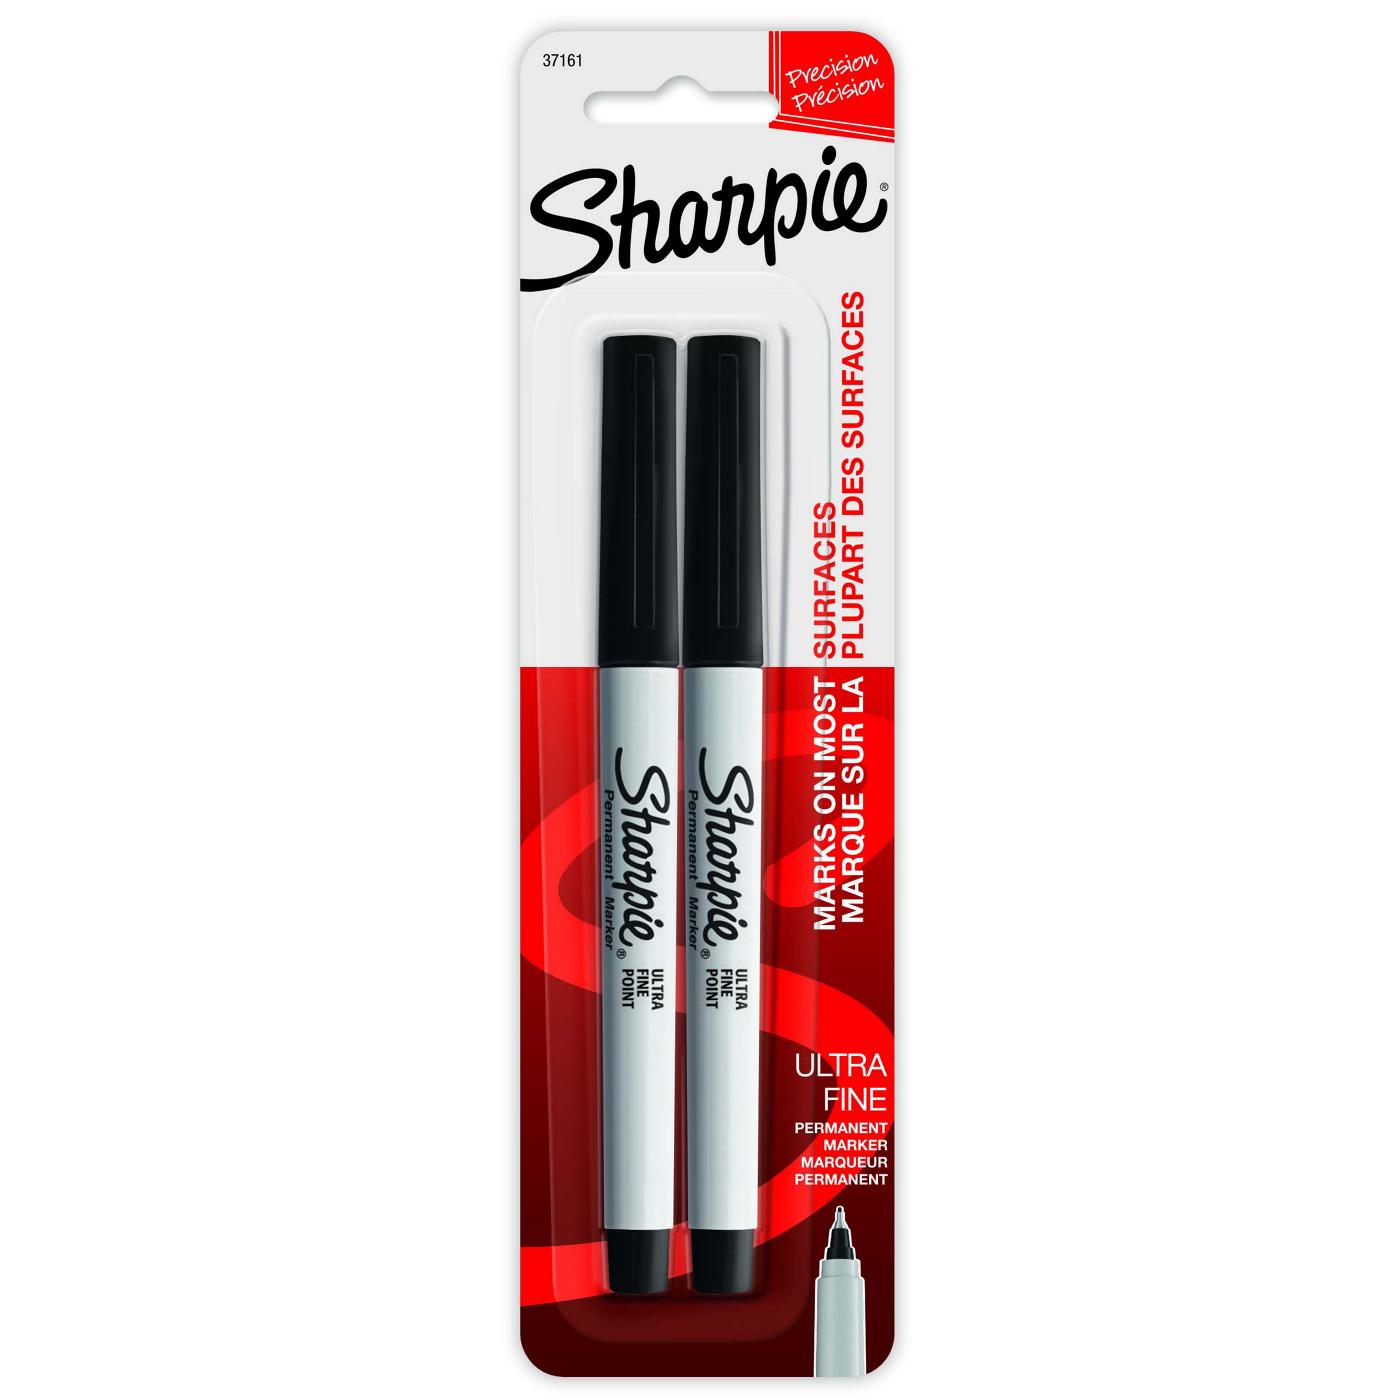 Sharpie Metallic Silver Permanent Marker (2 markers)